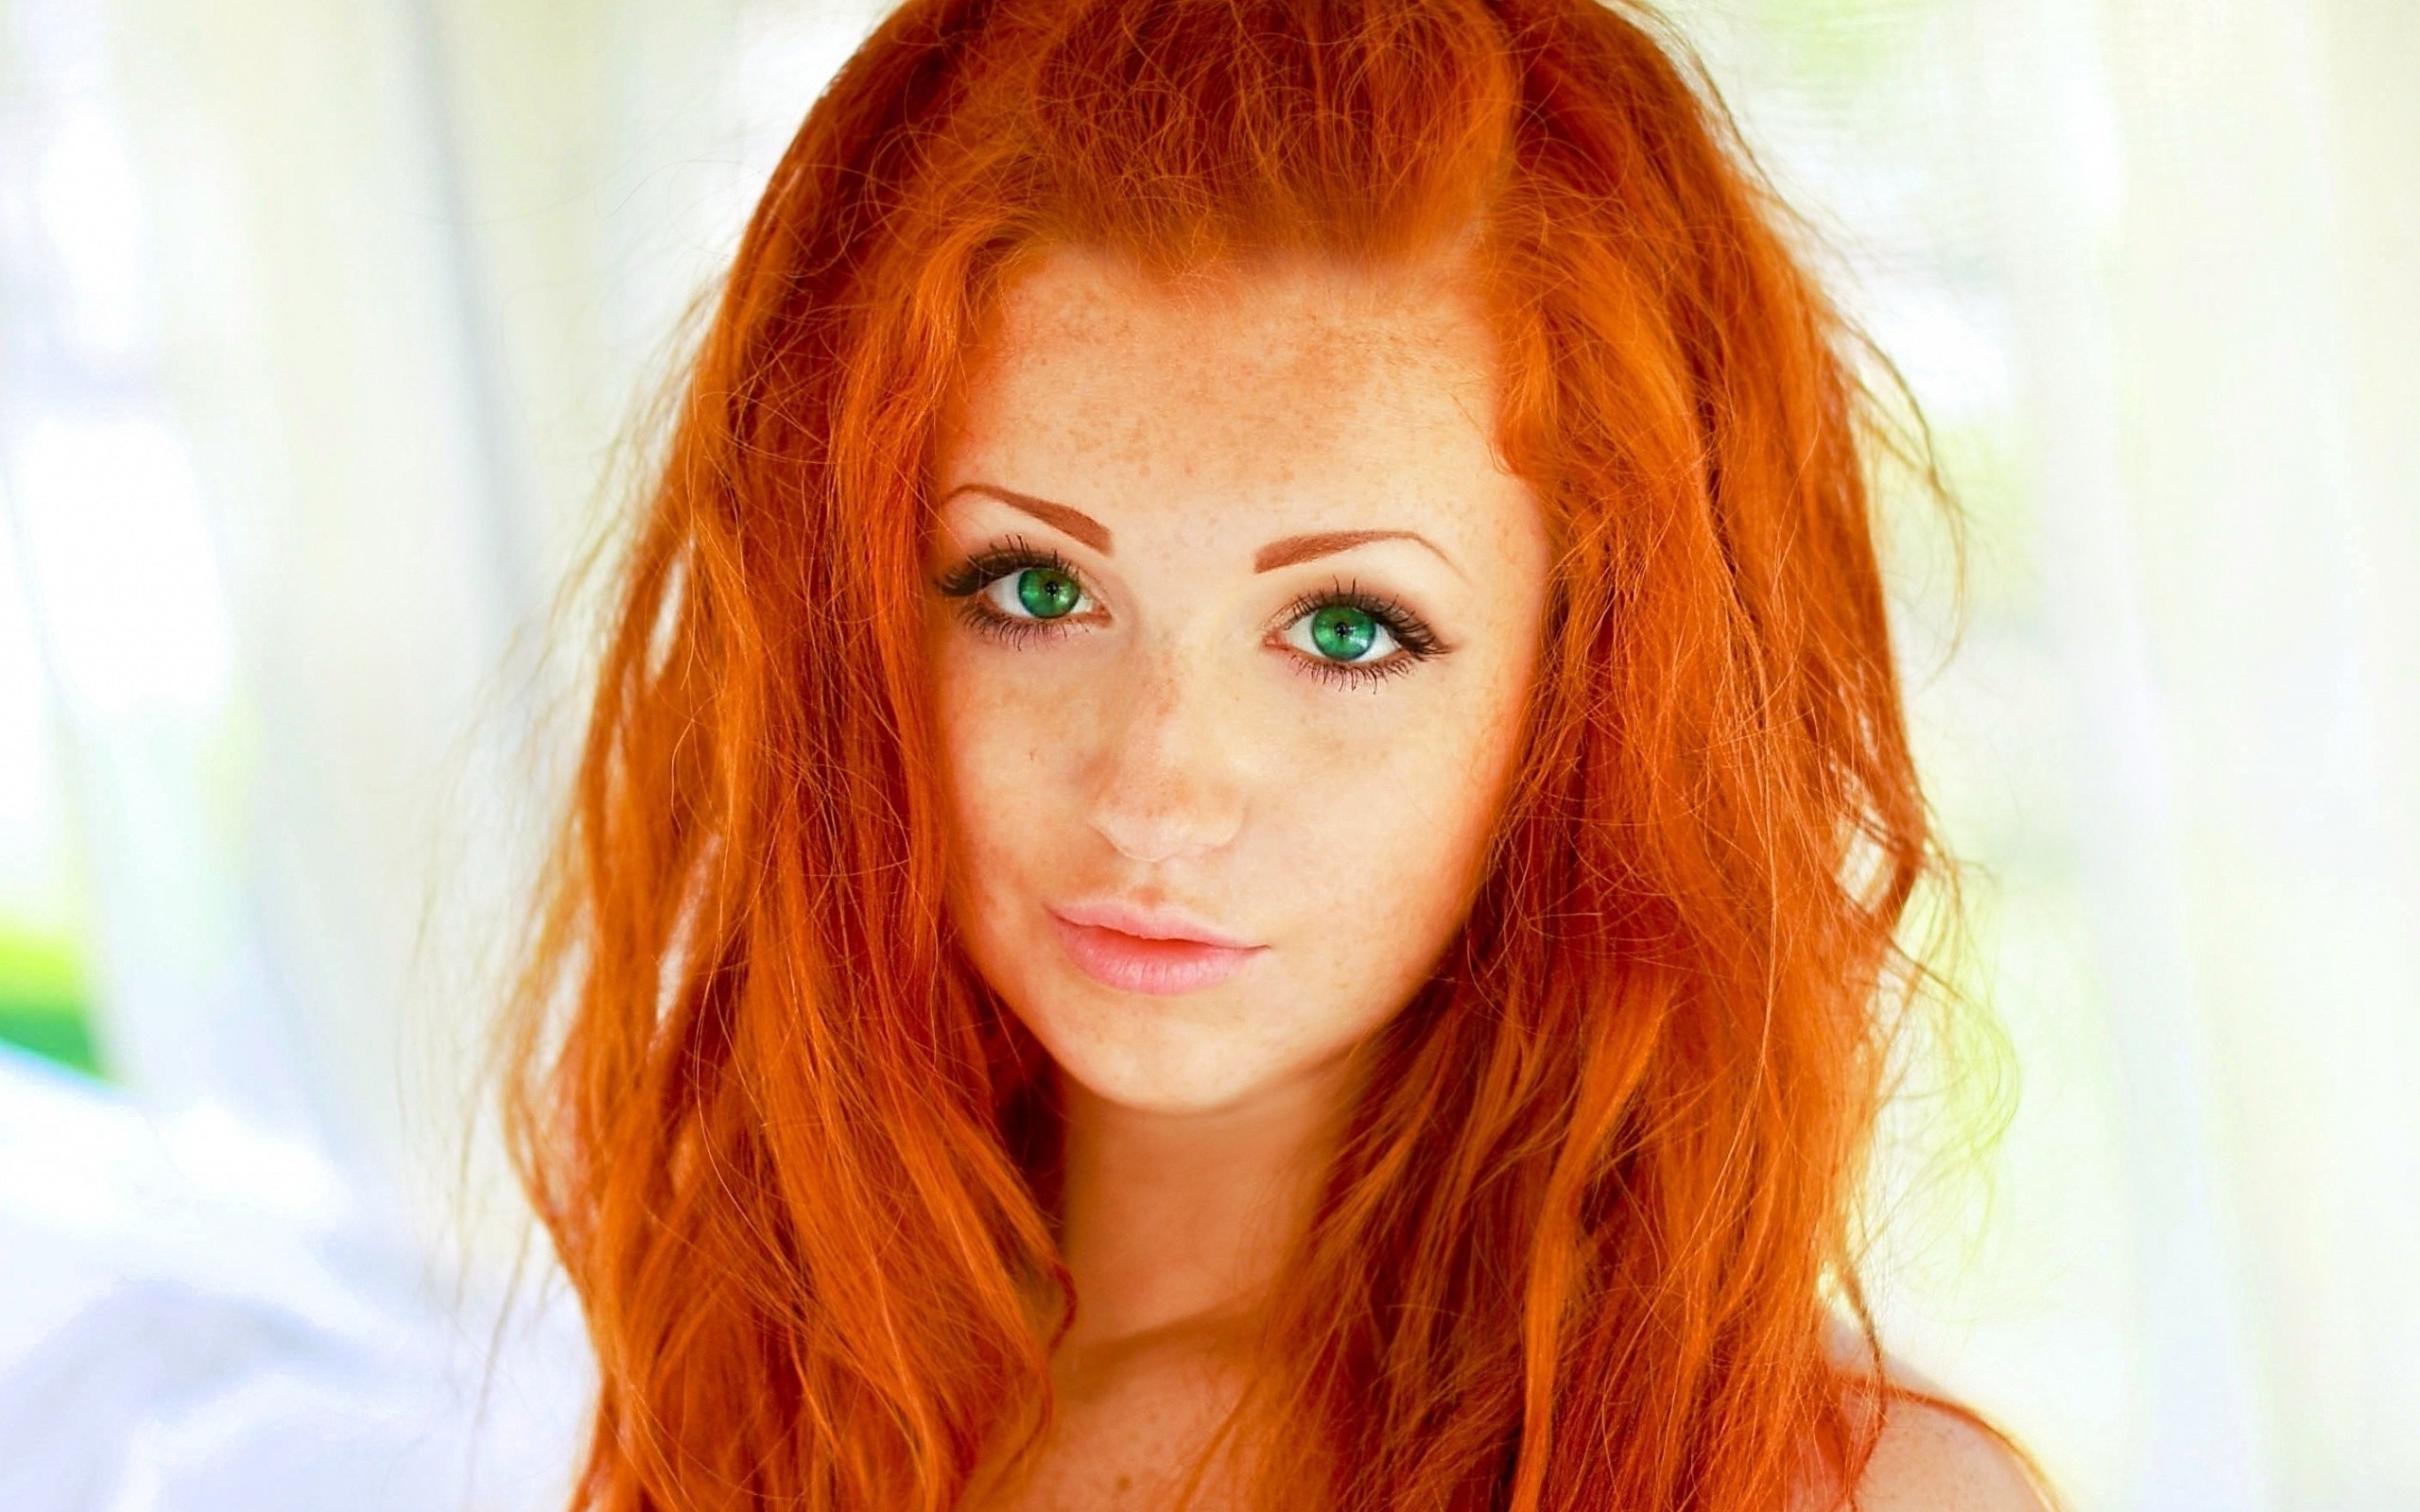 Green Eyes Women Model Redhead Face Portrait Freckles Wallpapers Hd Desktop And Mobile